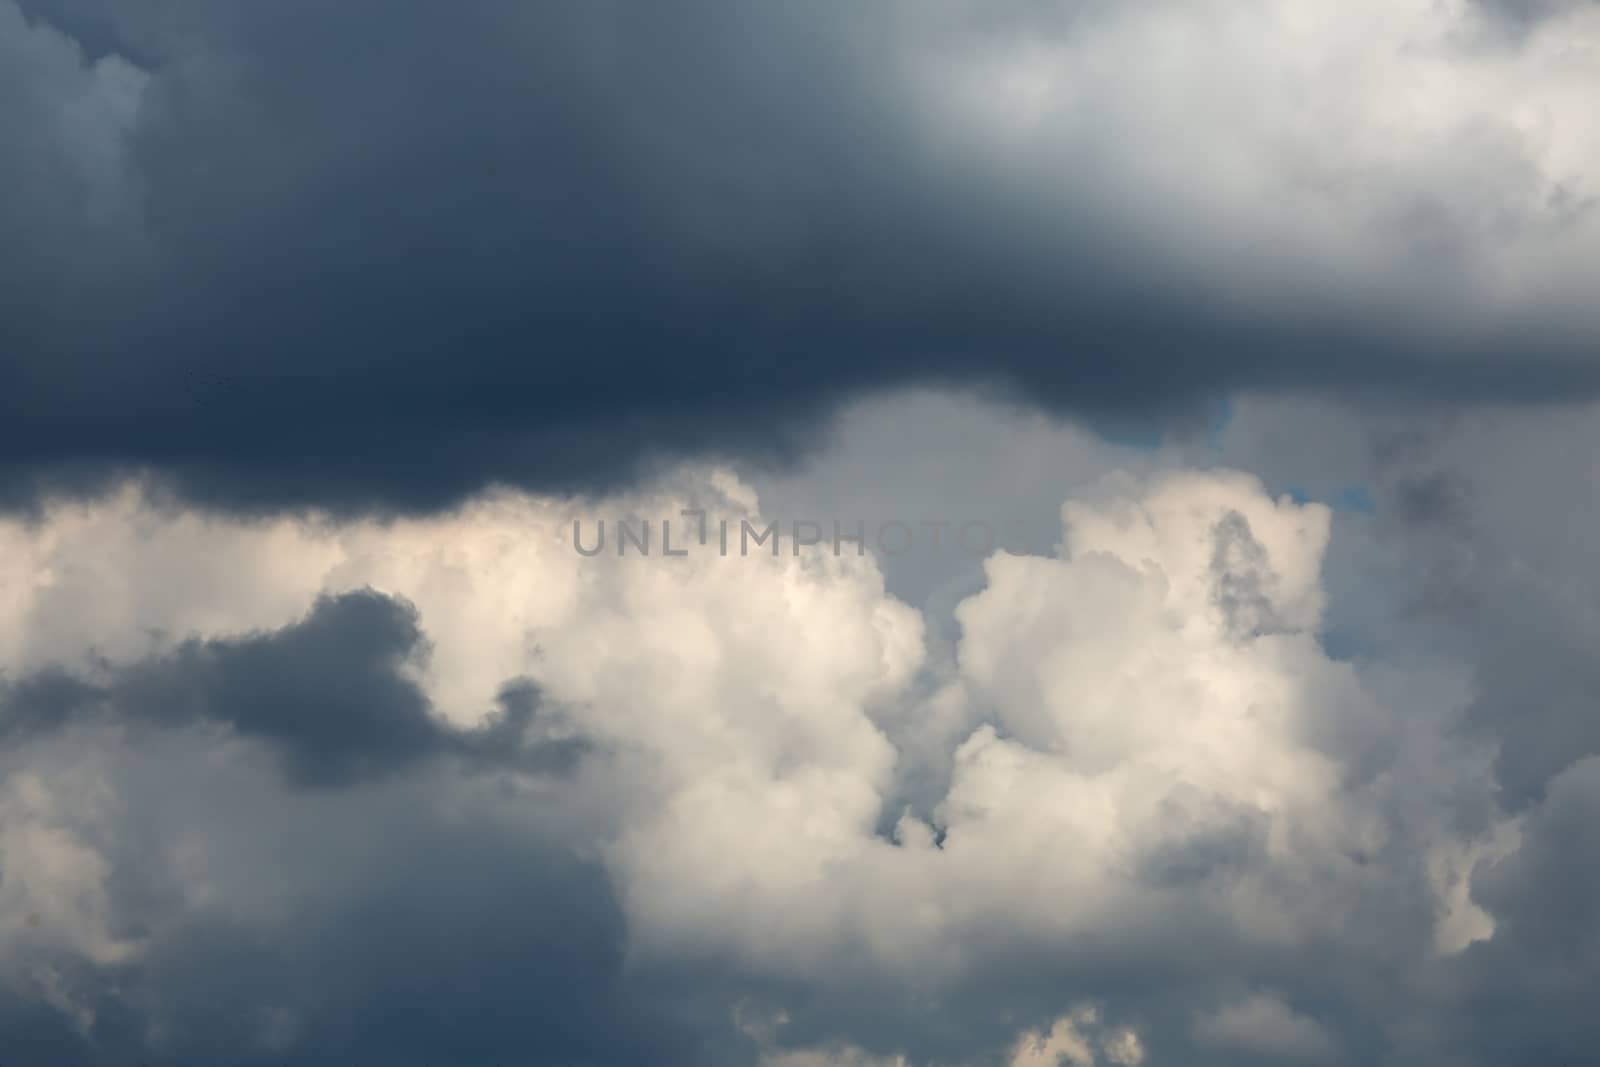 Clouds by Gudella